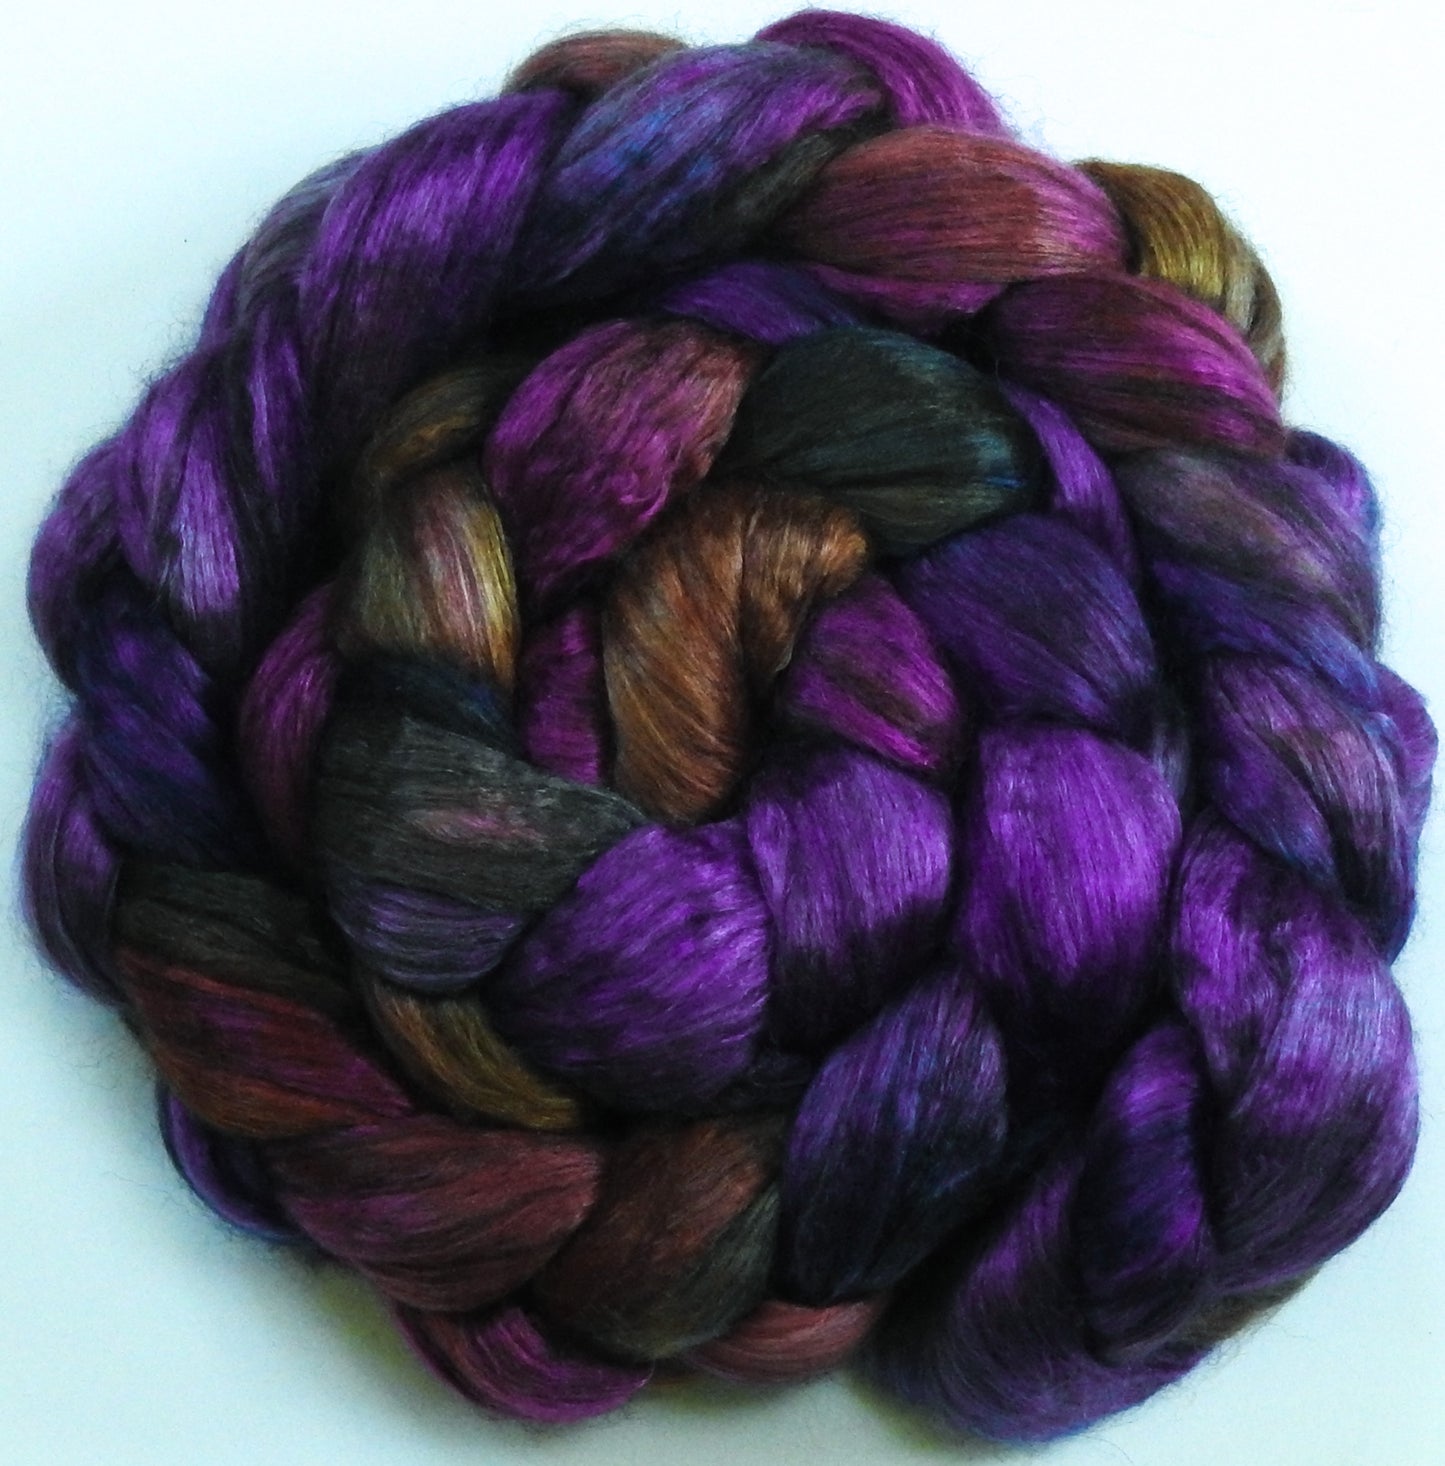 Esther - YAK / mulberry silk ( 50/50)